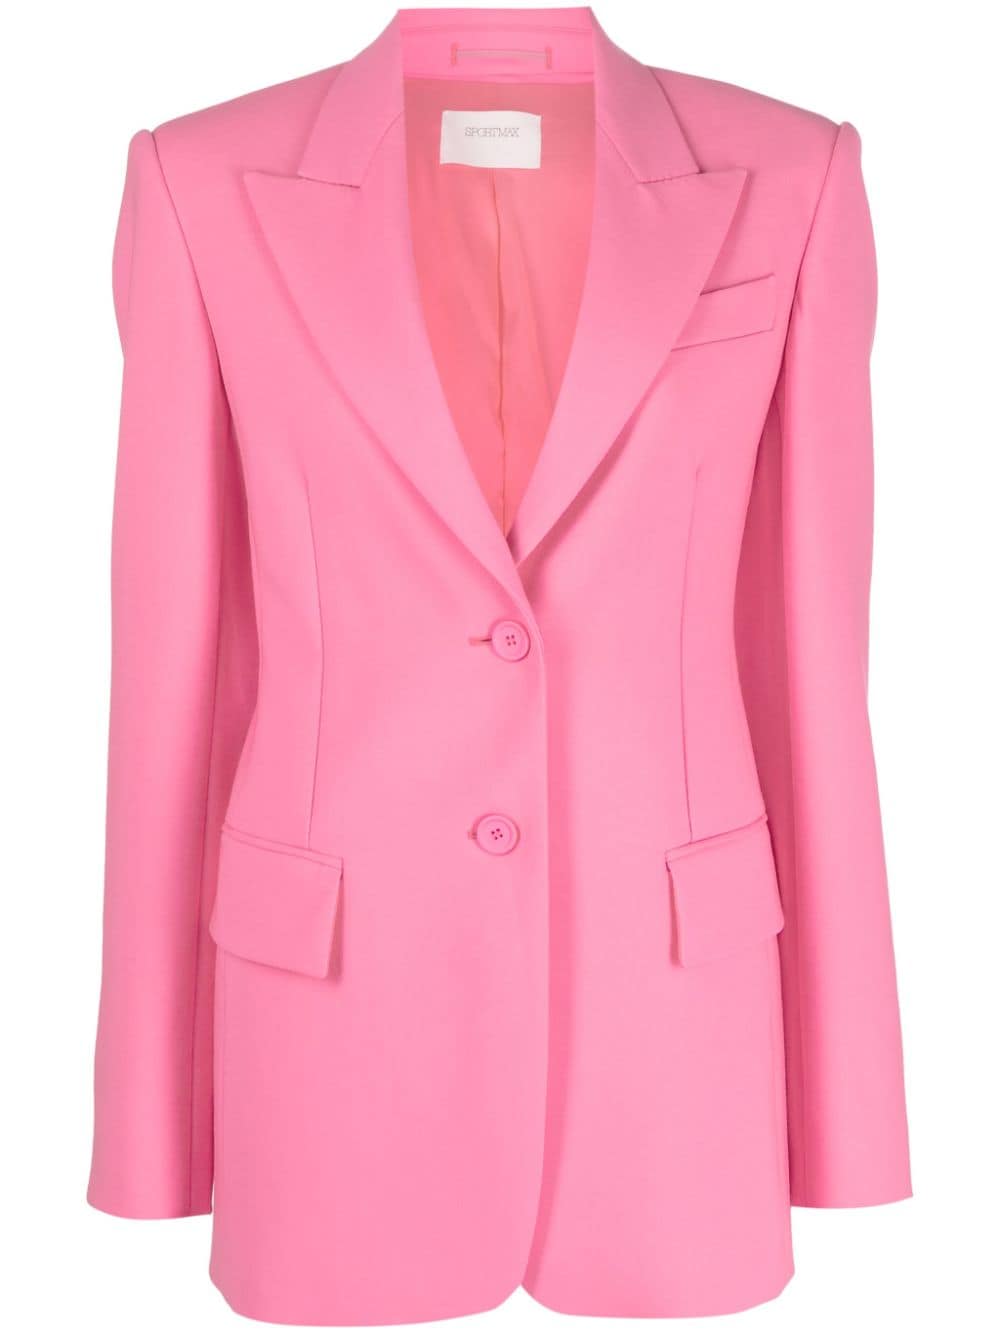 MAX MARA SPORTMAX Bubblegum Pink Wool Single-Breasted Jacket for Women